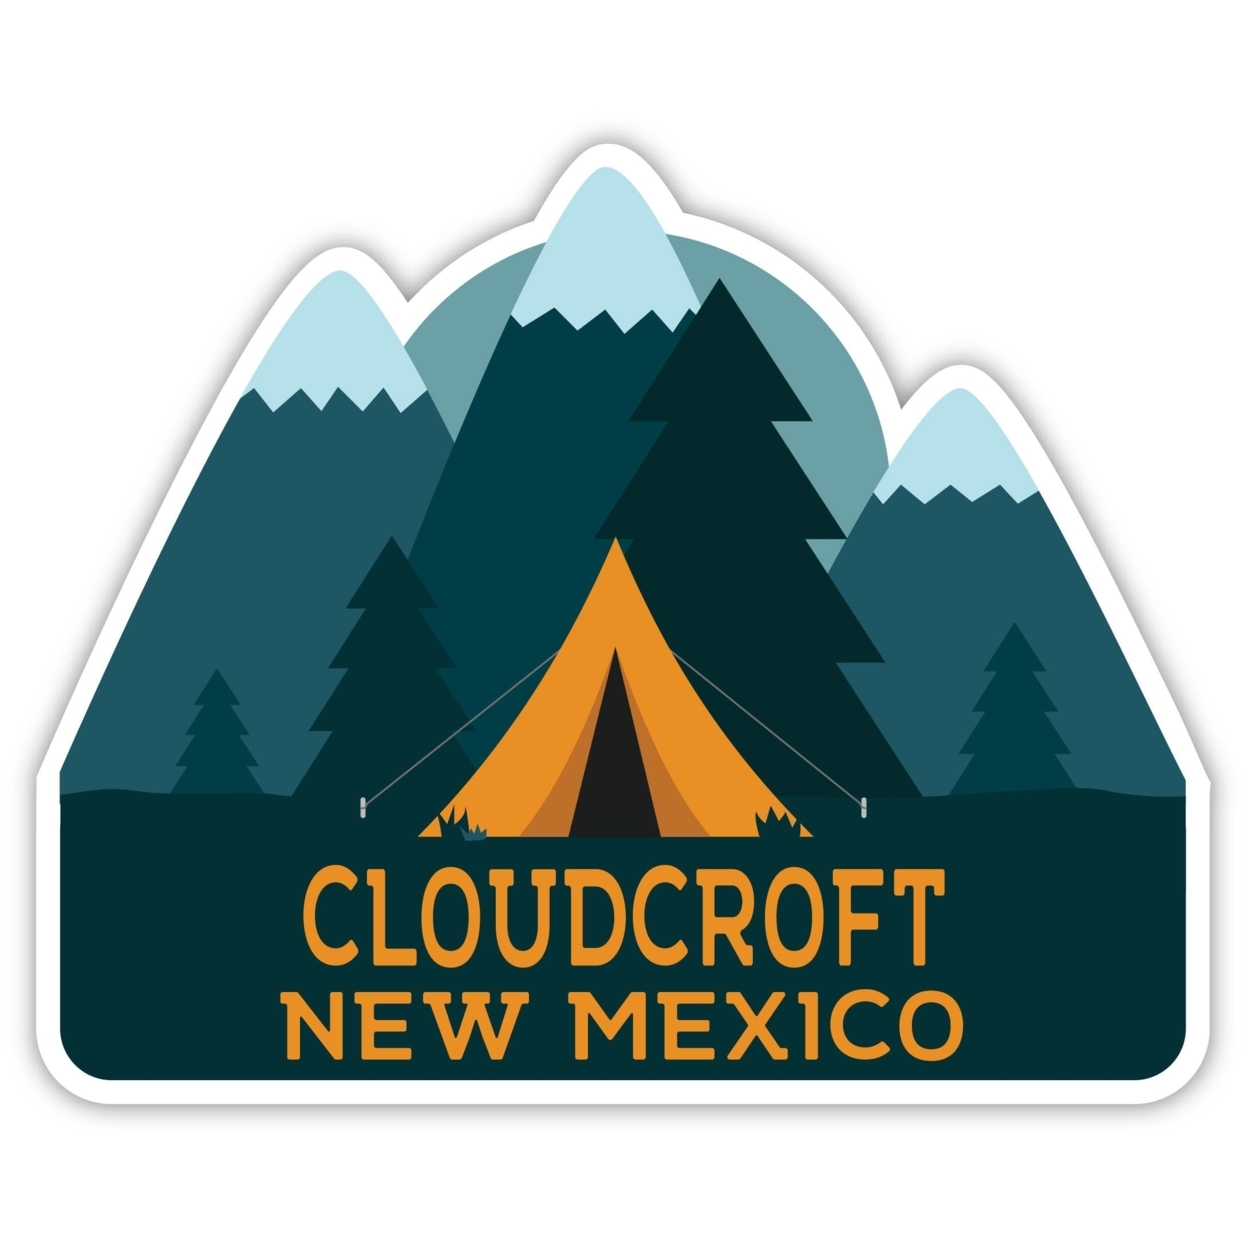 Cloudcroft New Mexico Souvenir Decorative Stickers (Choose Theme And Size) - 4-Pack, 12-Inch, Tent